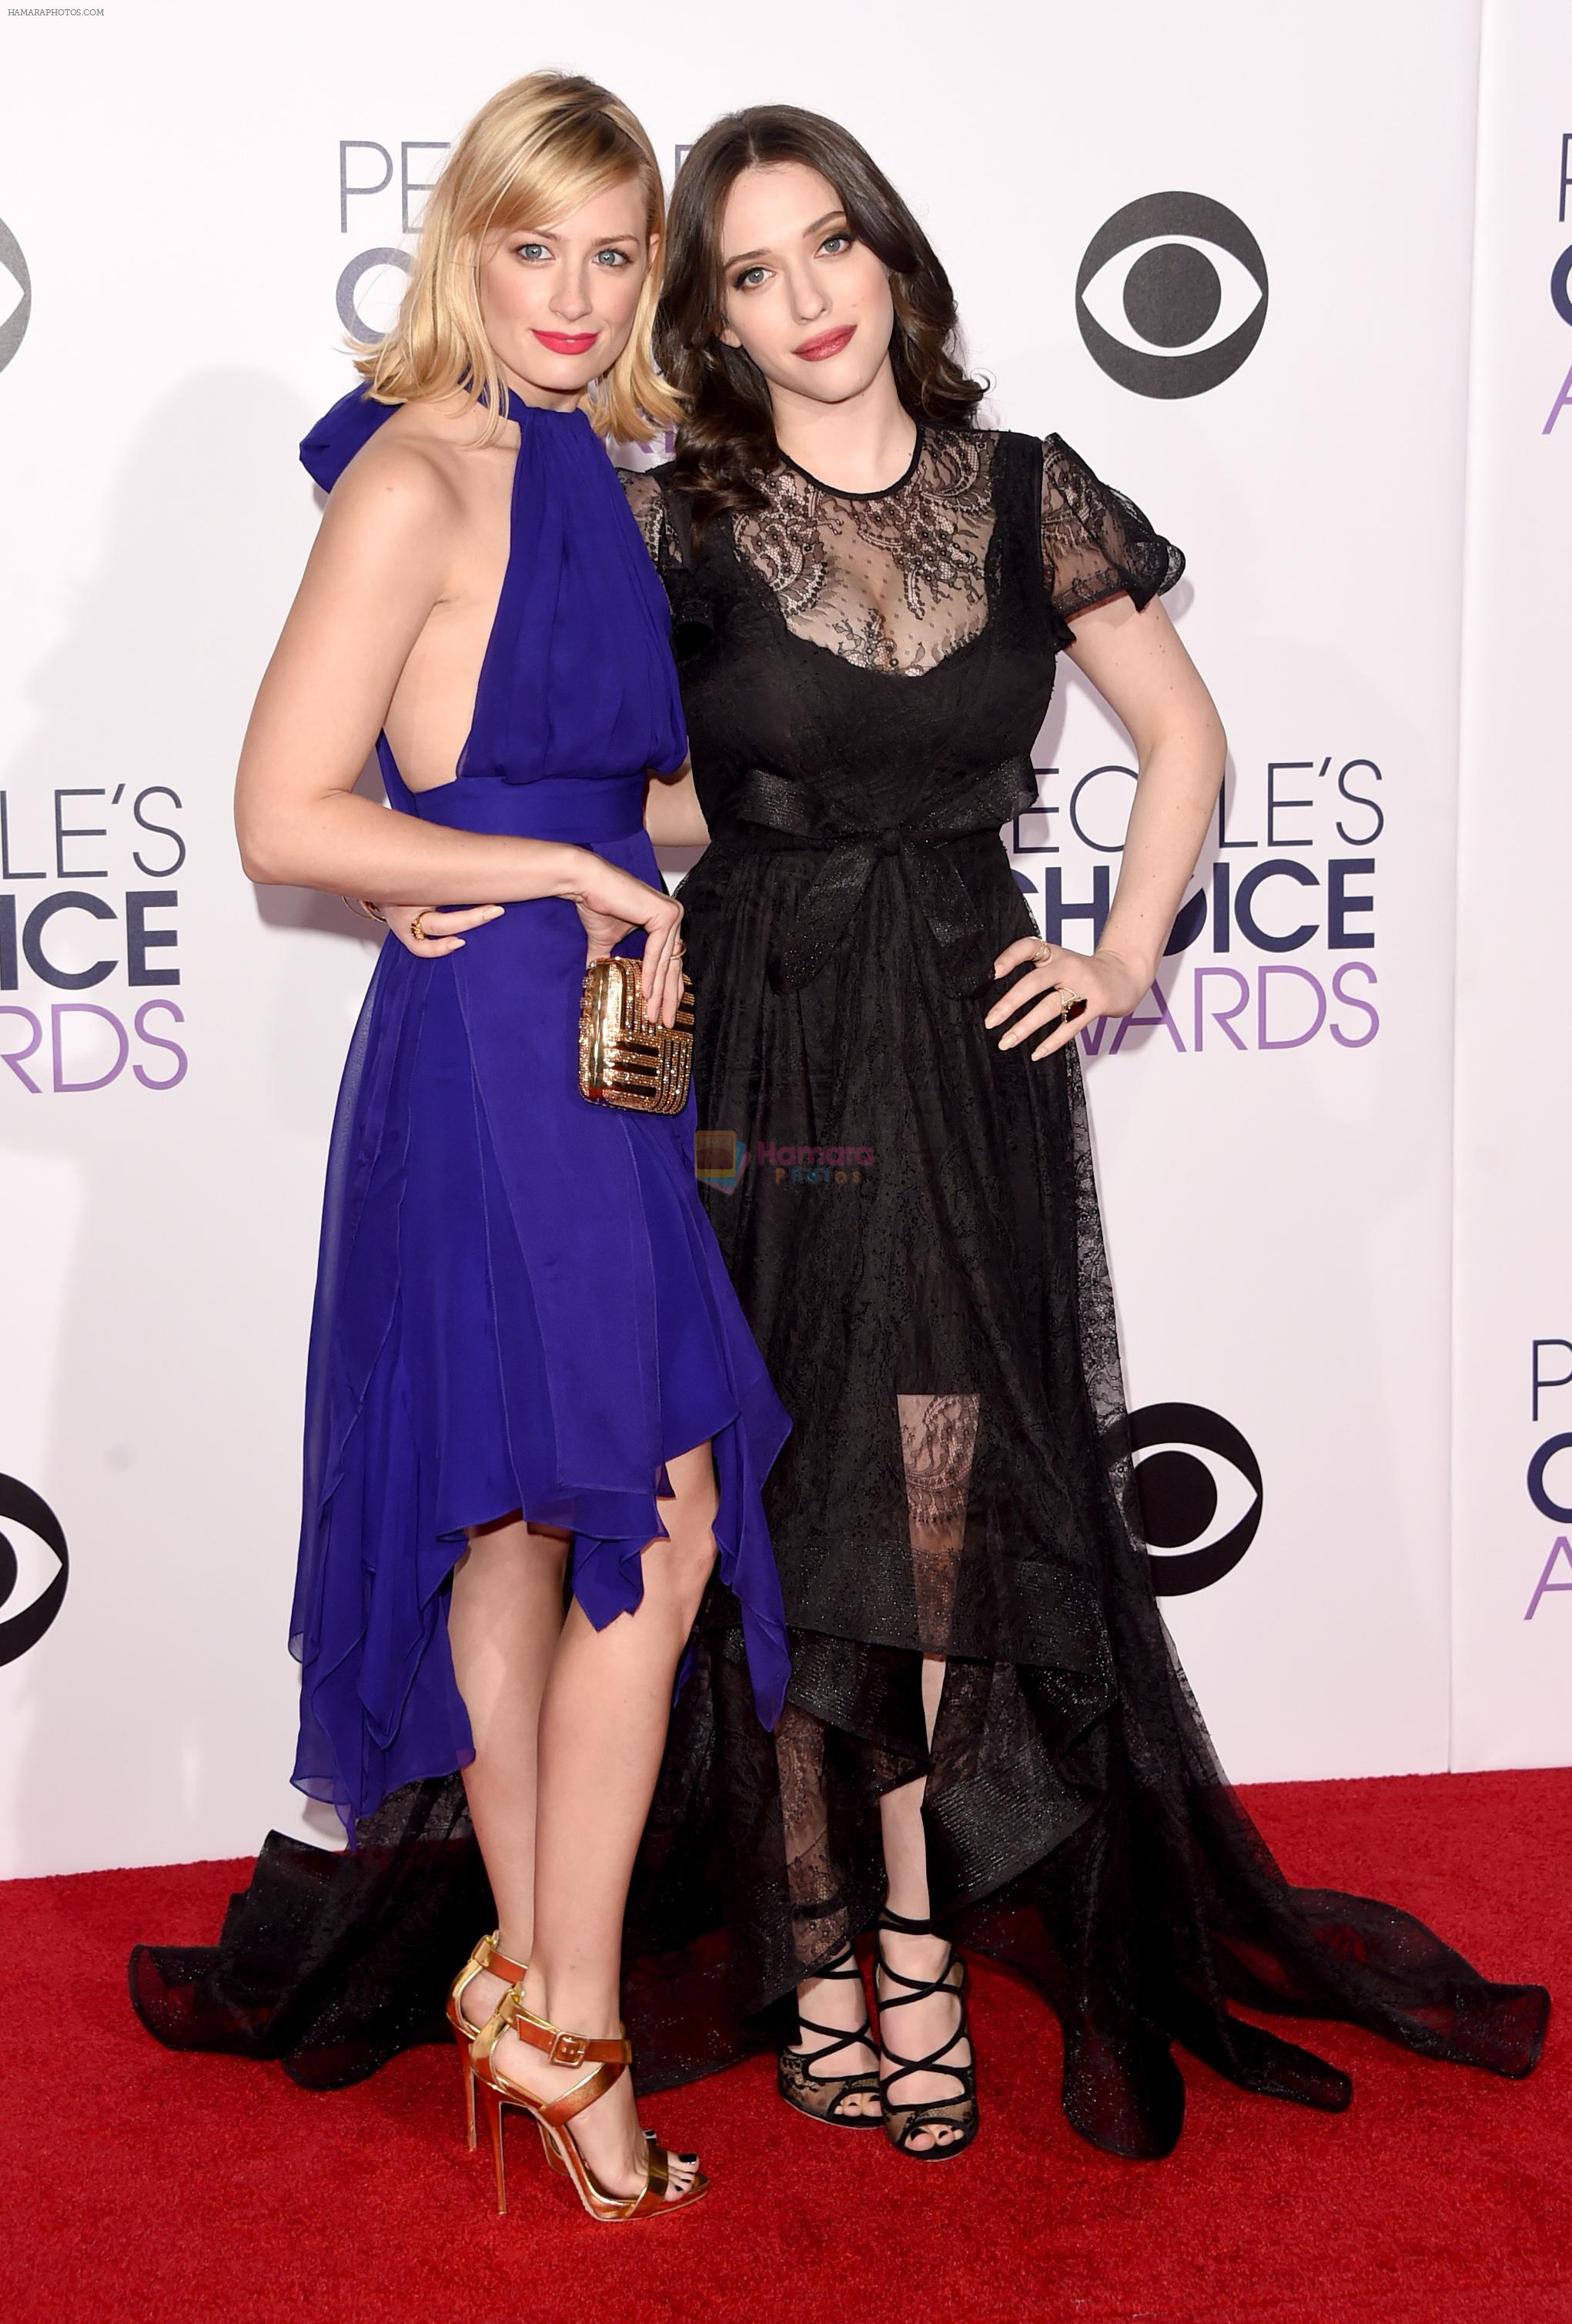 at People Choice Awards 2015 on 8th Jan 2015